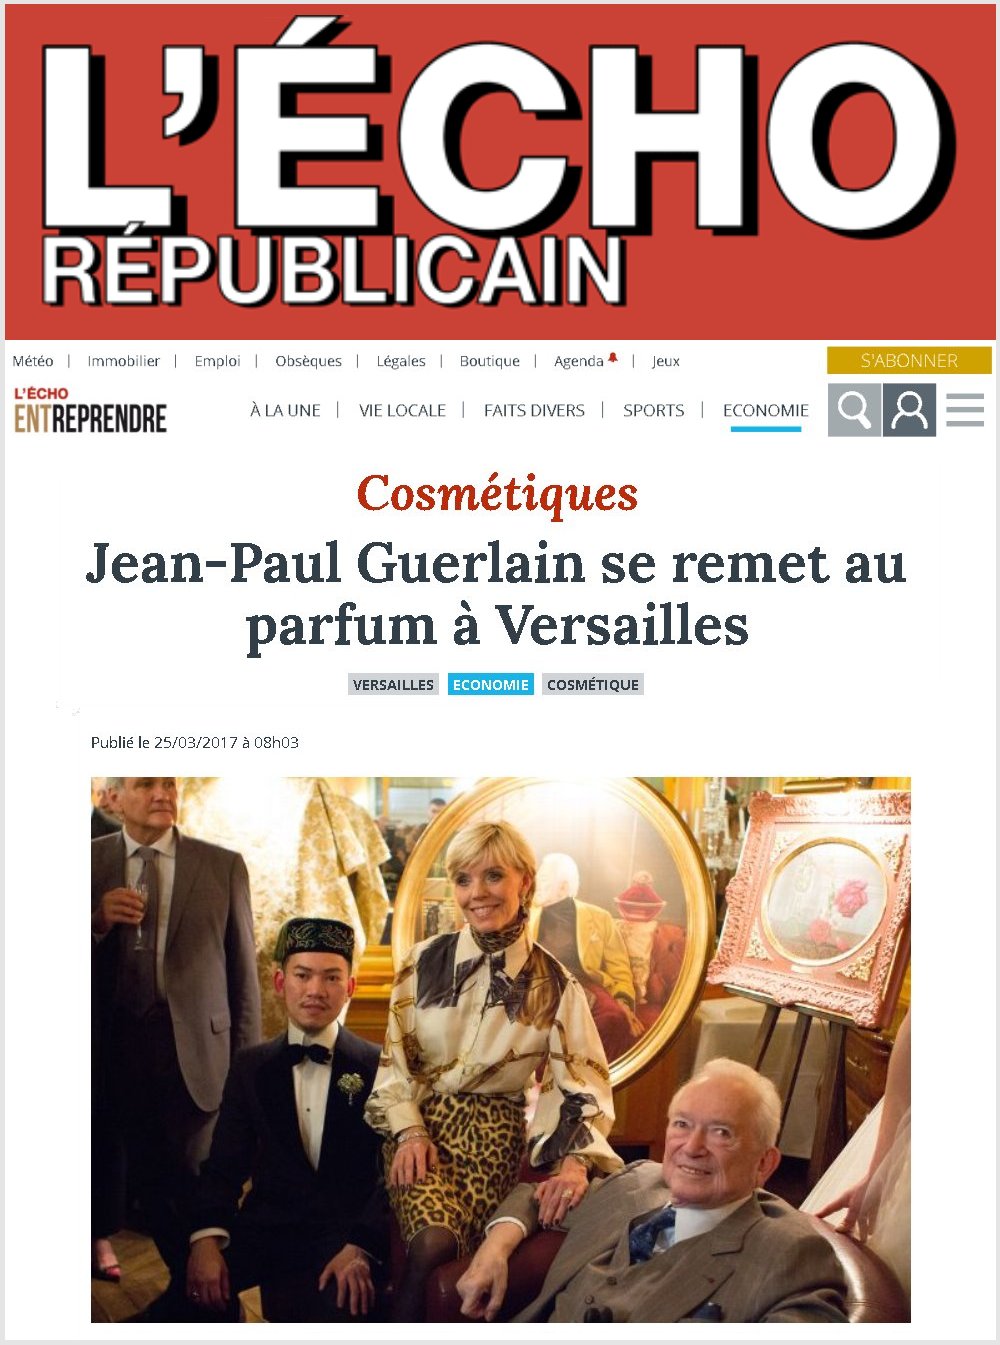 Jean-Paul Guerlain returns to perfume in Versailles